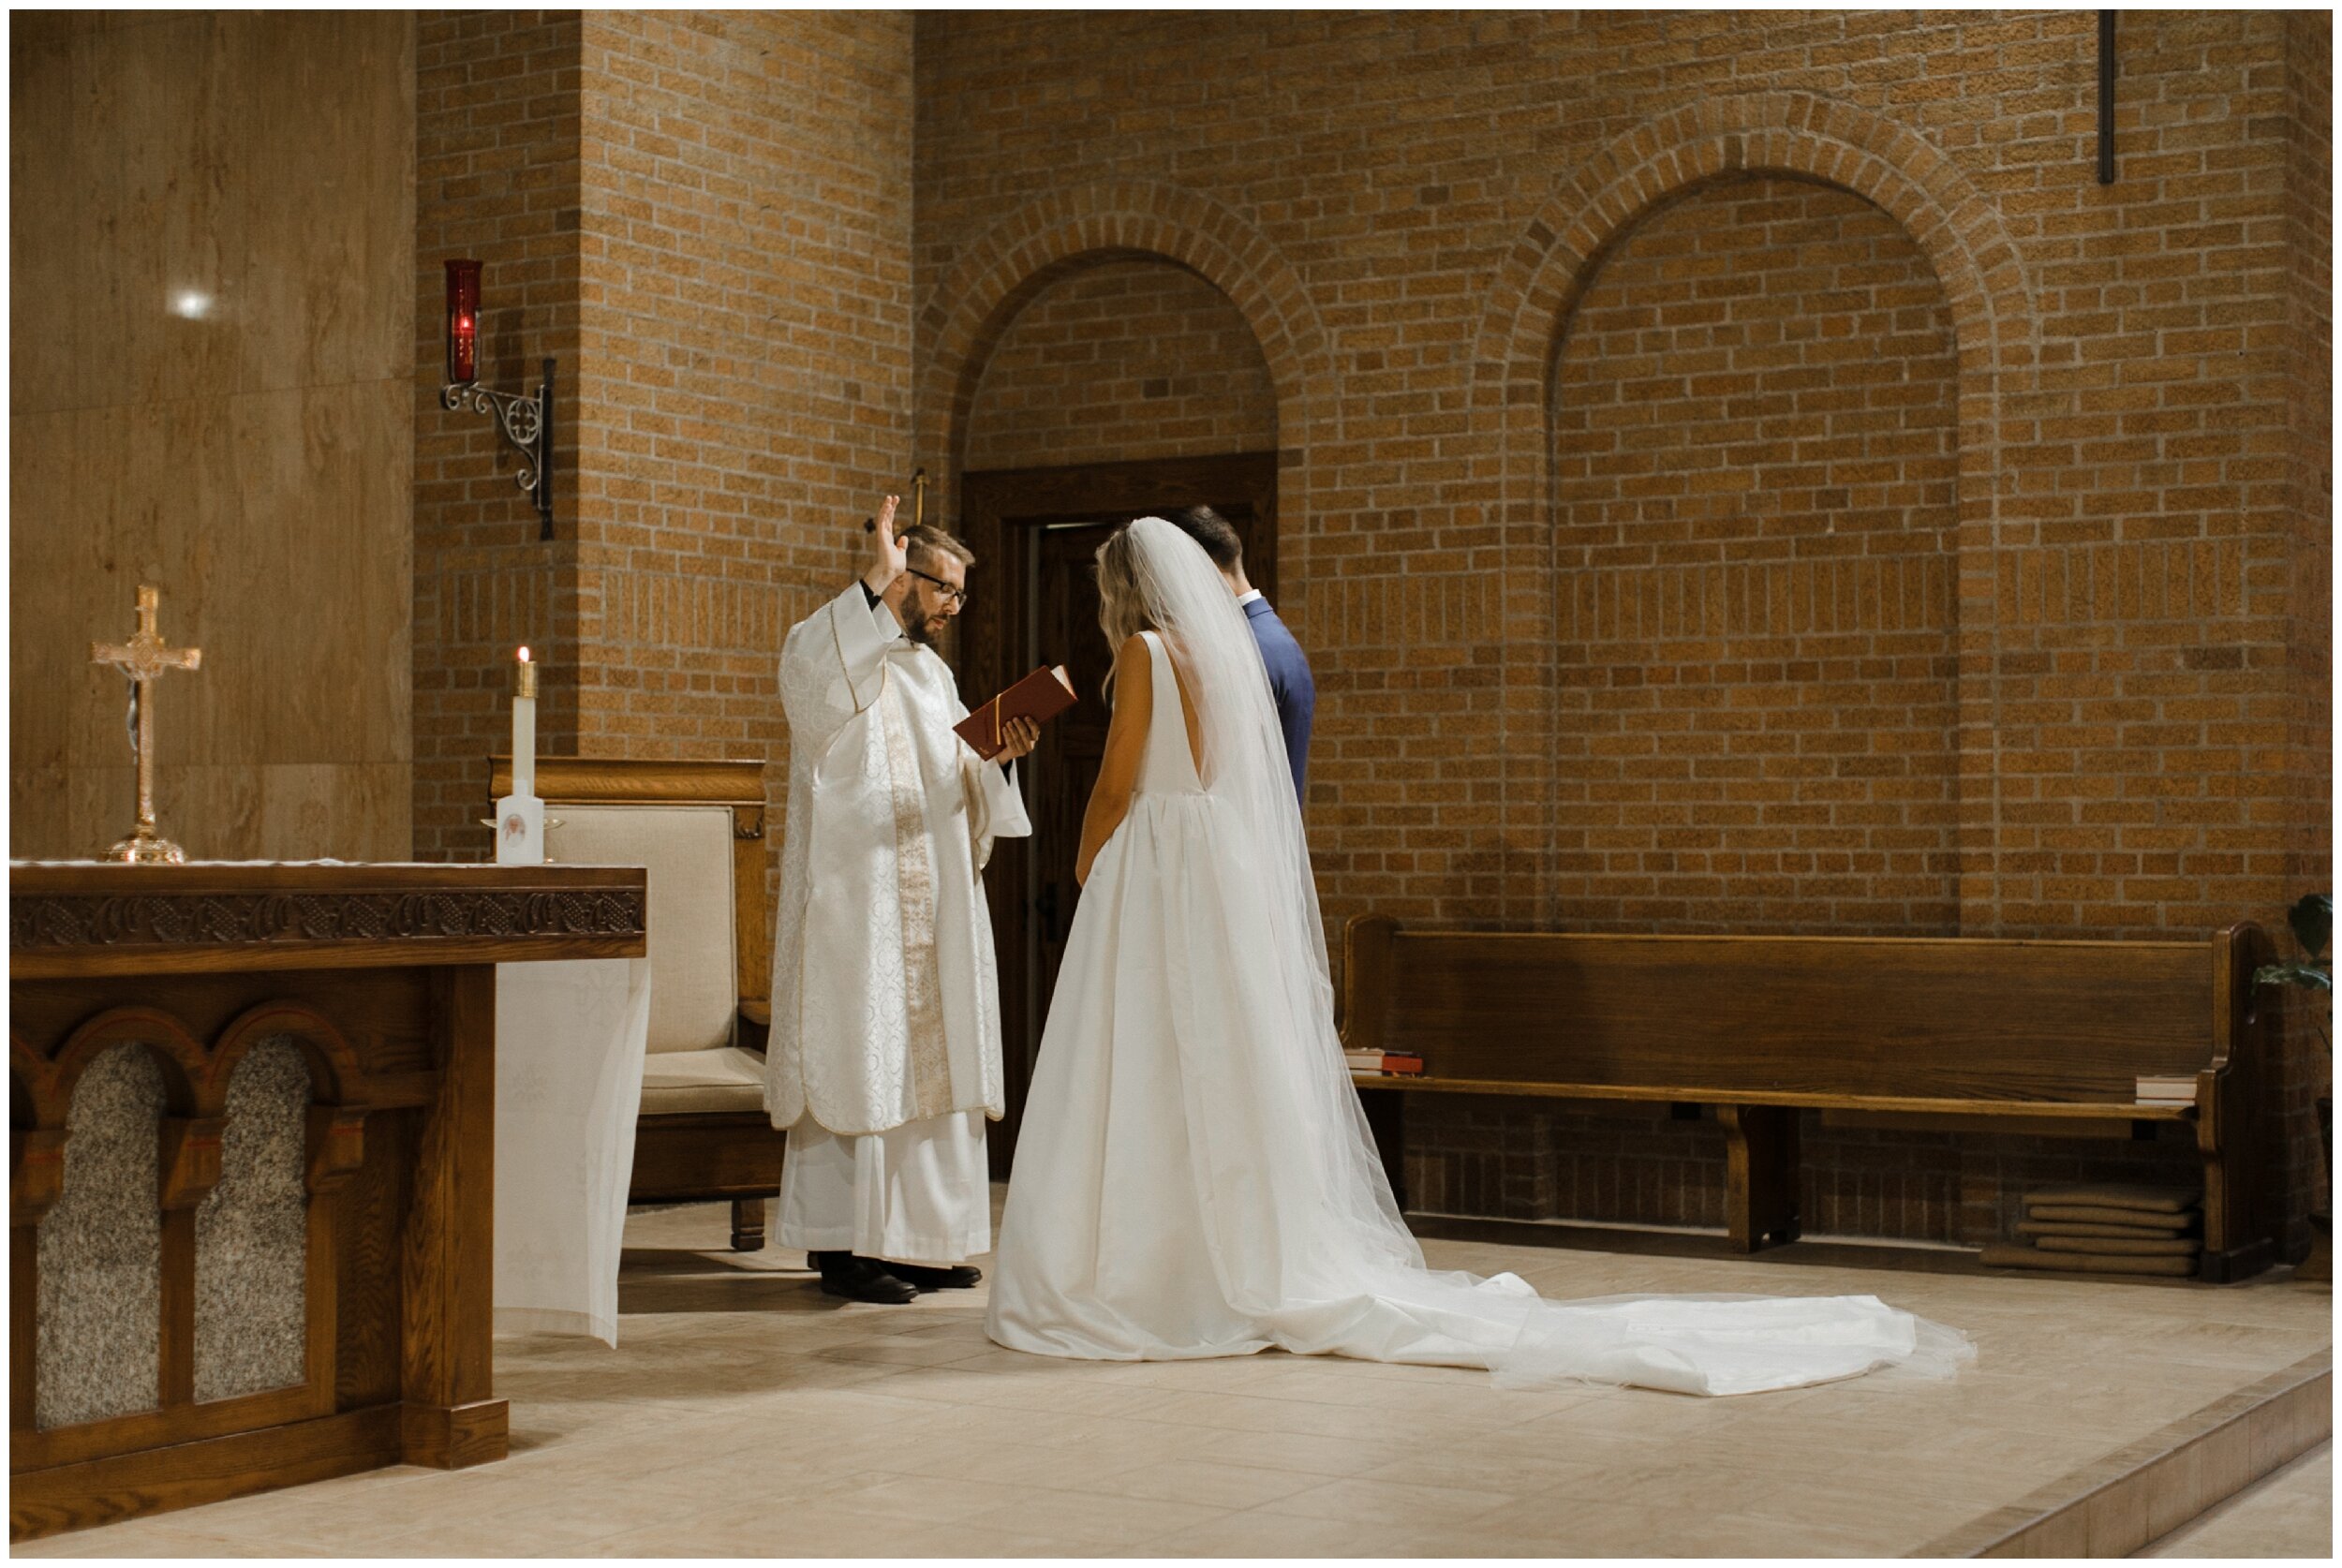 Romantic church wedding ceremony in Brainerd Minnesota photographed by Britt DeZeeuw